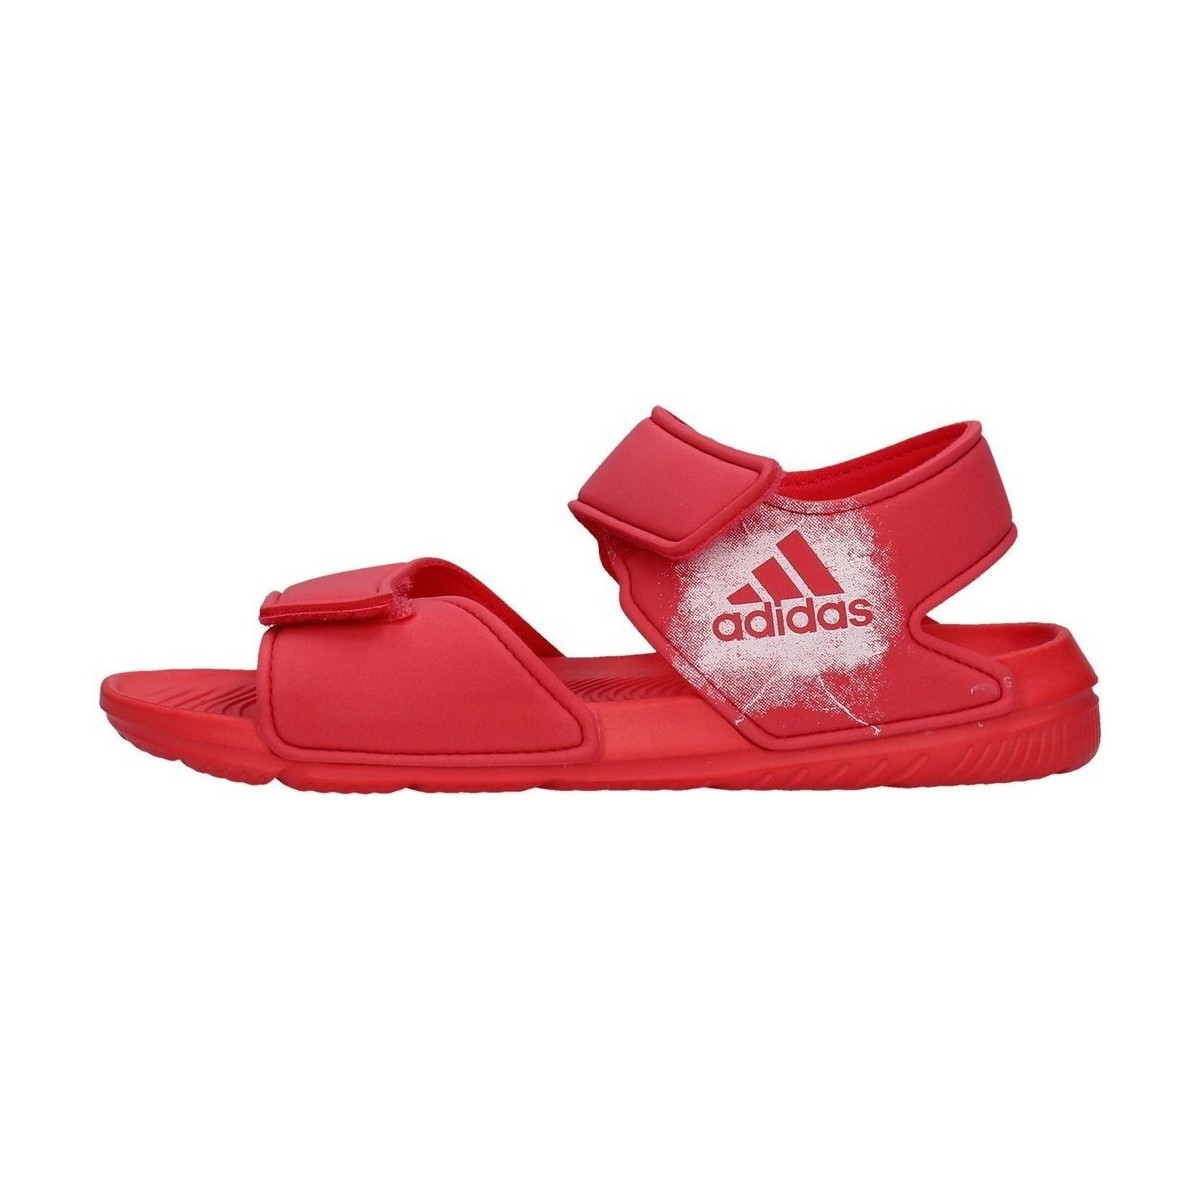 Sko Pige Sandaler adidas Originals BA7849 Rød